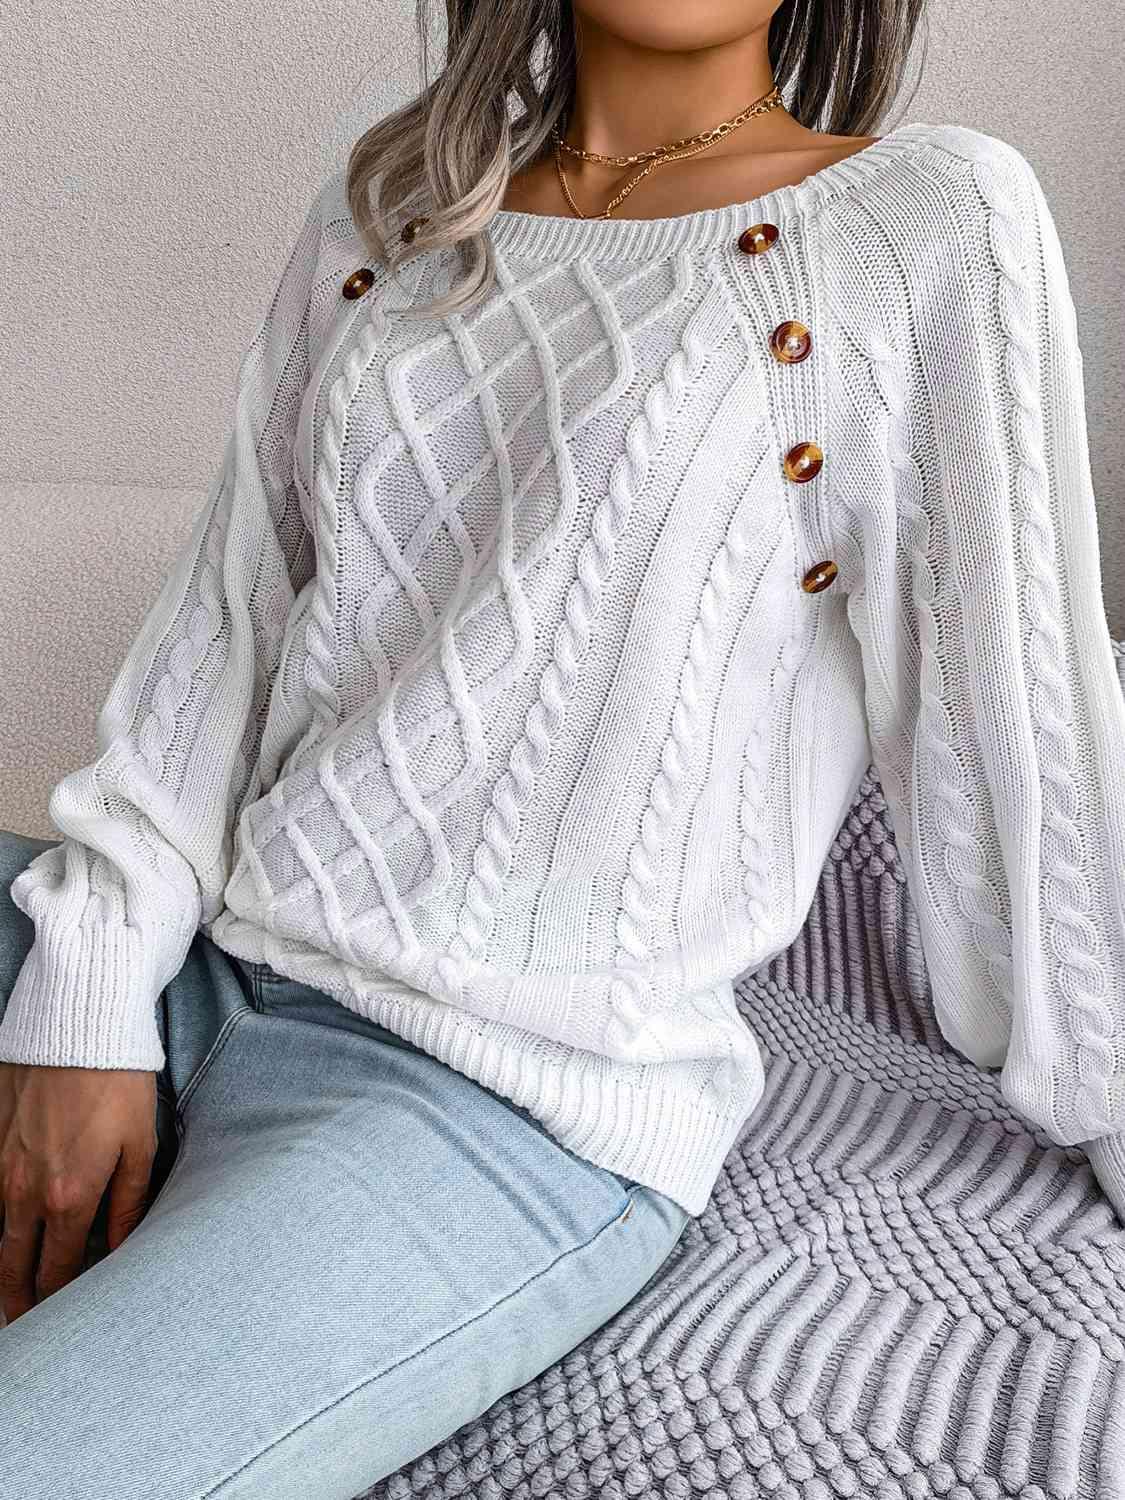 Decorative Button Cable-Knit Sweater - Vesteeto